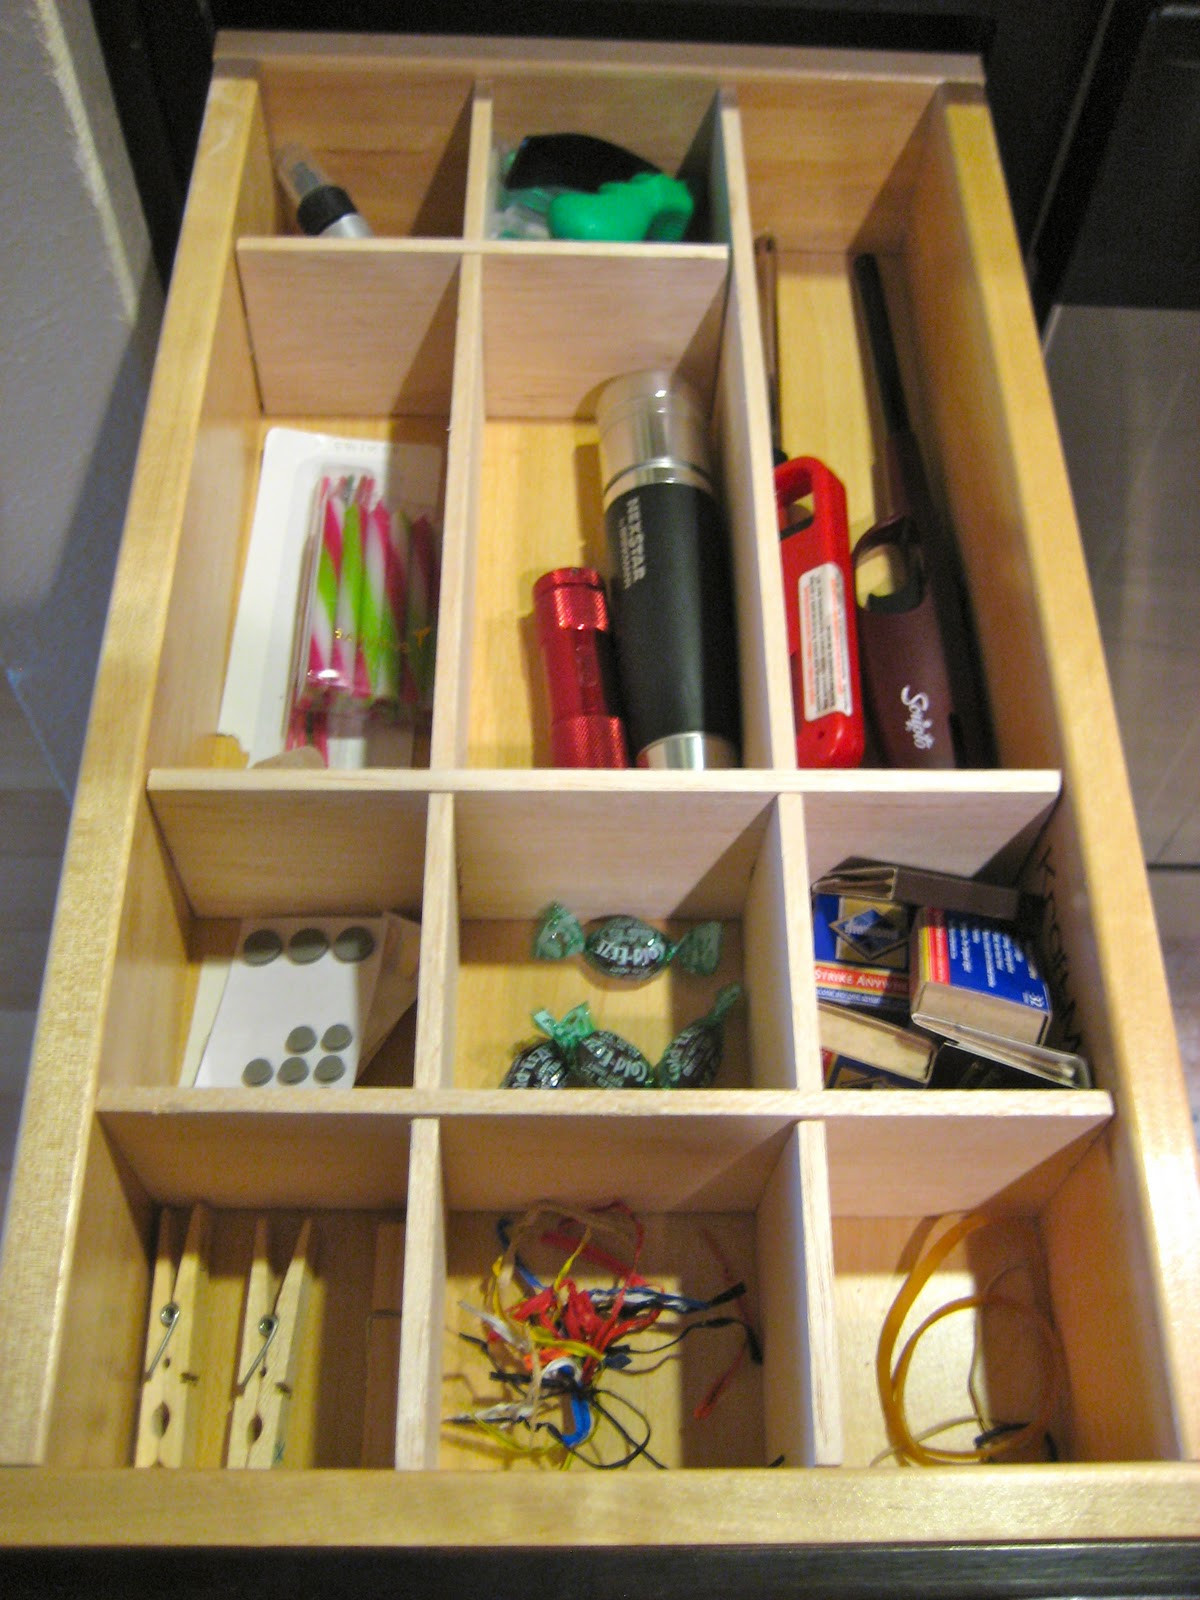 Best ideas about DIY Crafts Organizer
. Save or Pin C R A F T 72 Drawer Organizer Part 2 C R A F T Now.